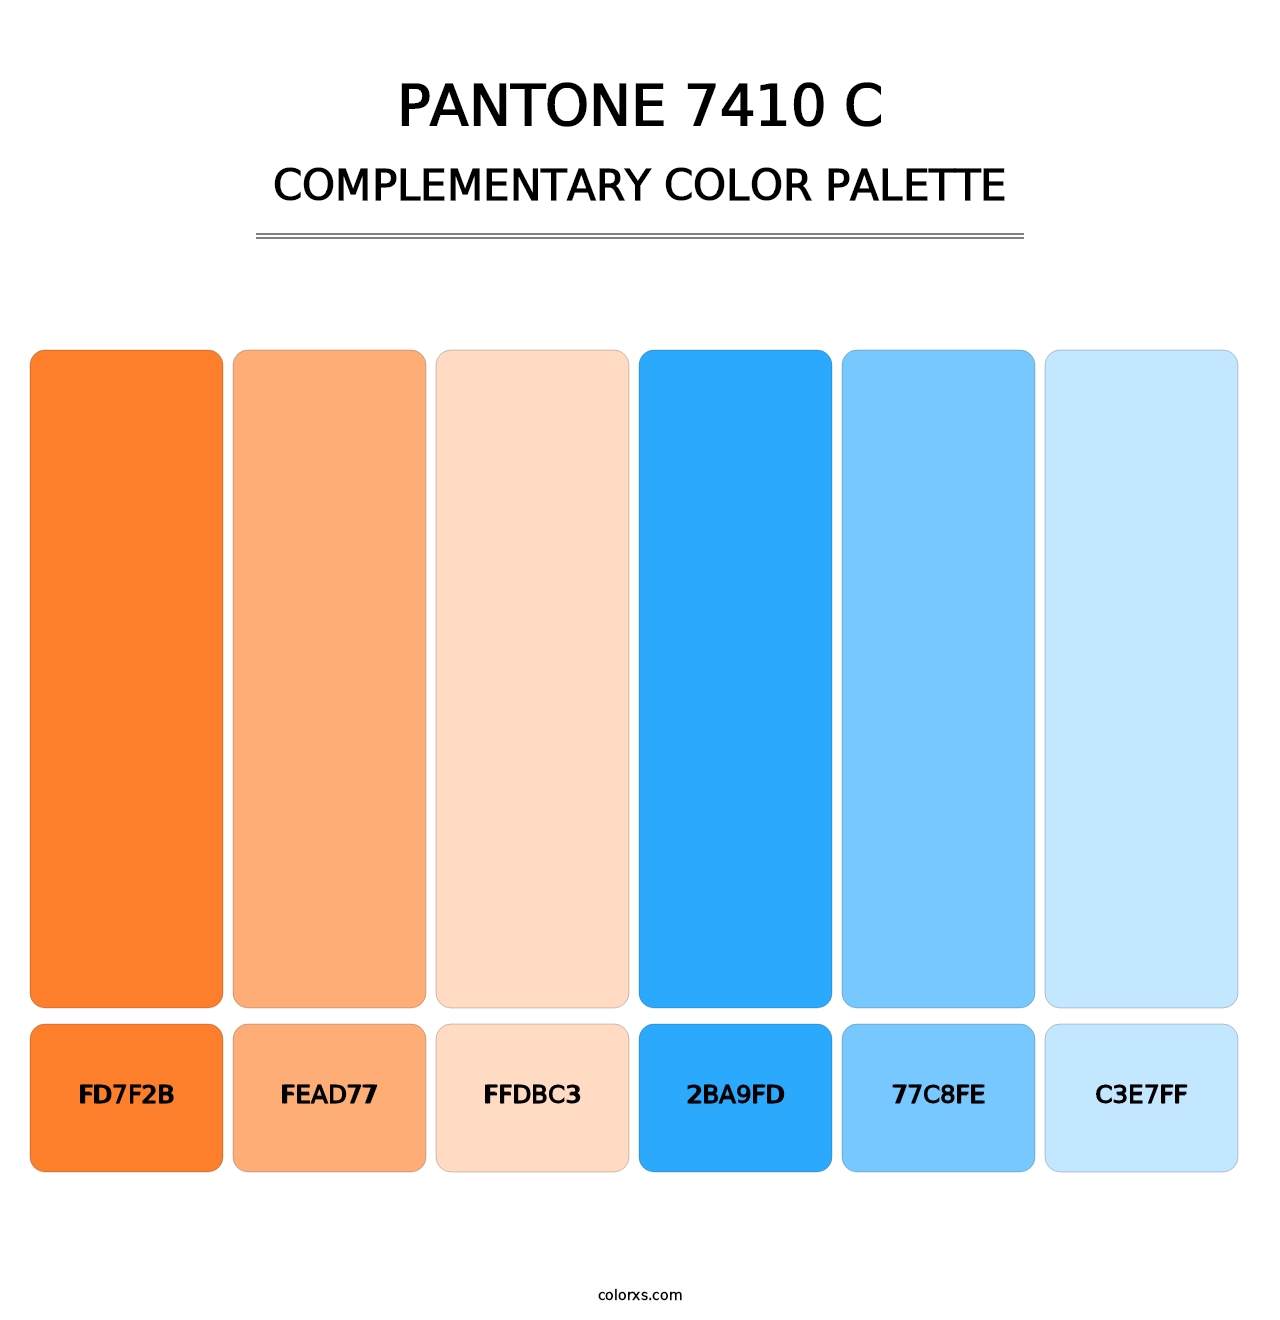 PANTONE 7410 C - Complementary Color Palette